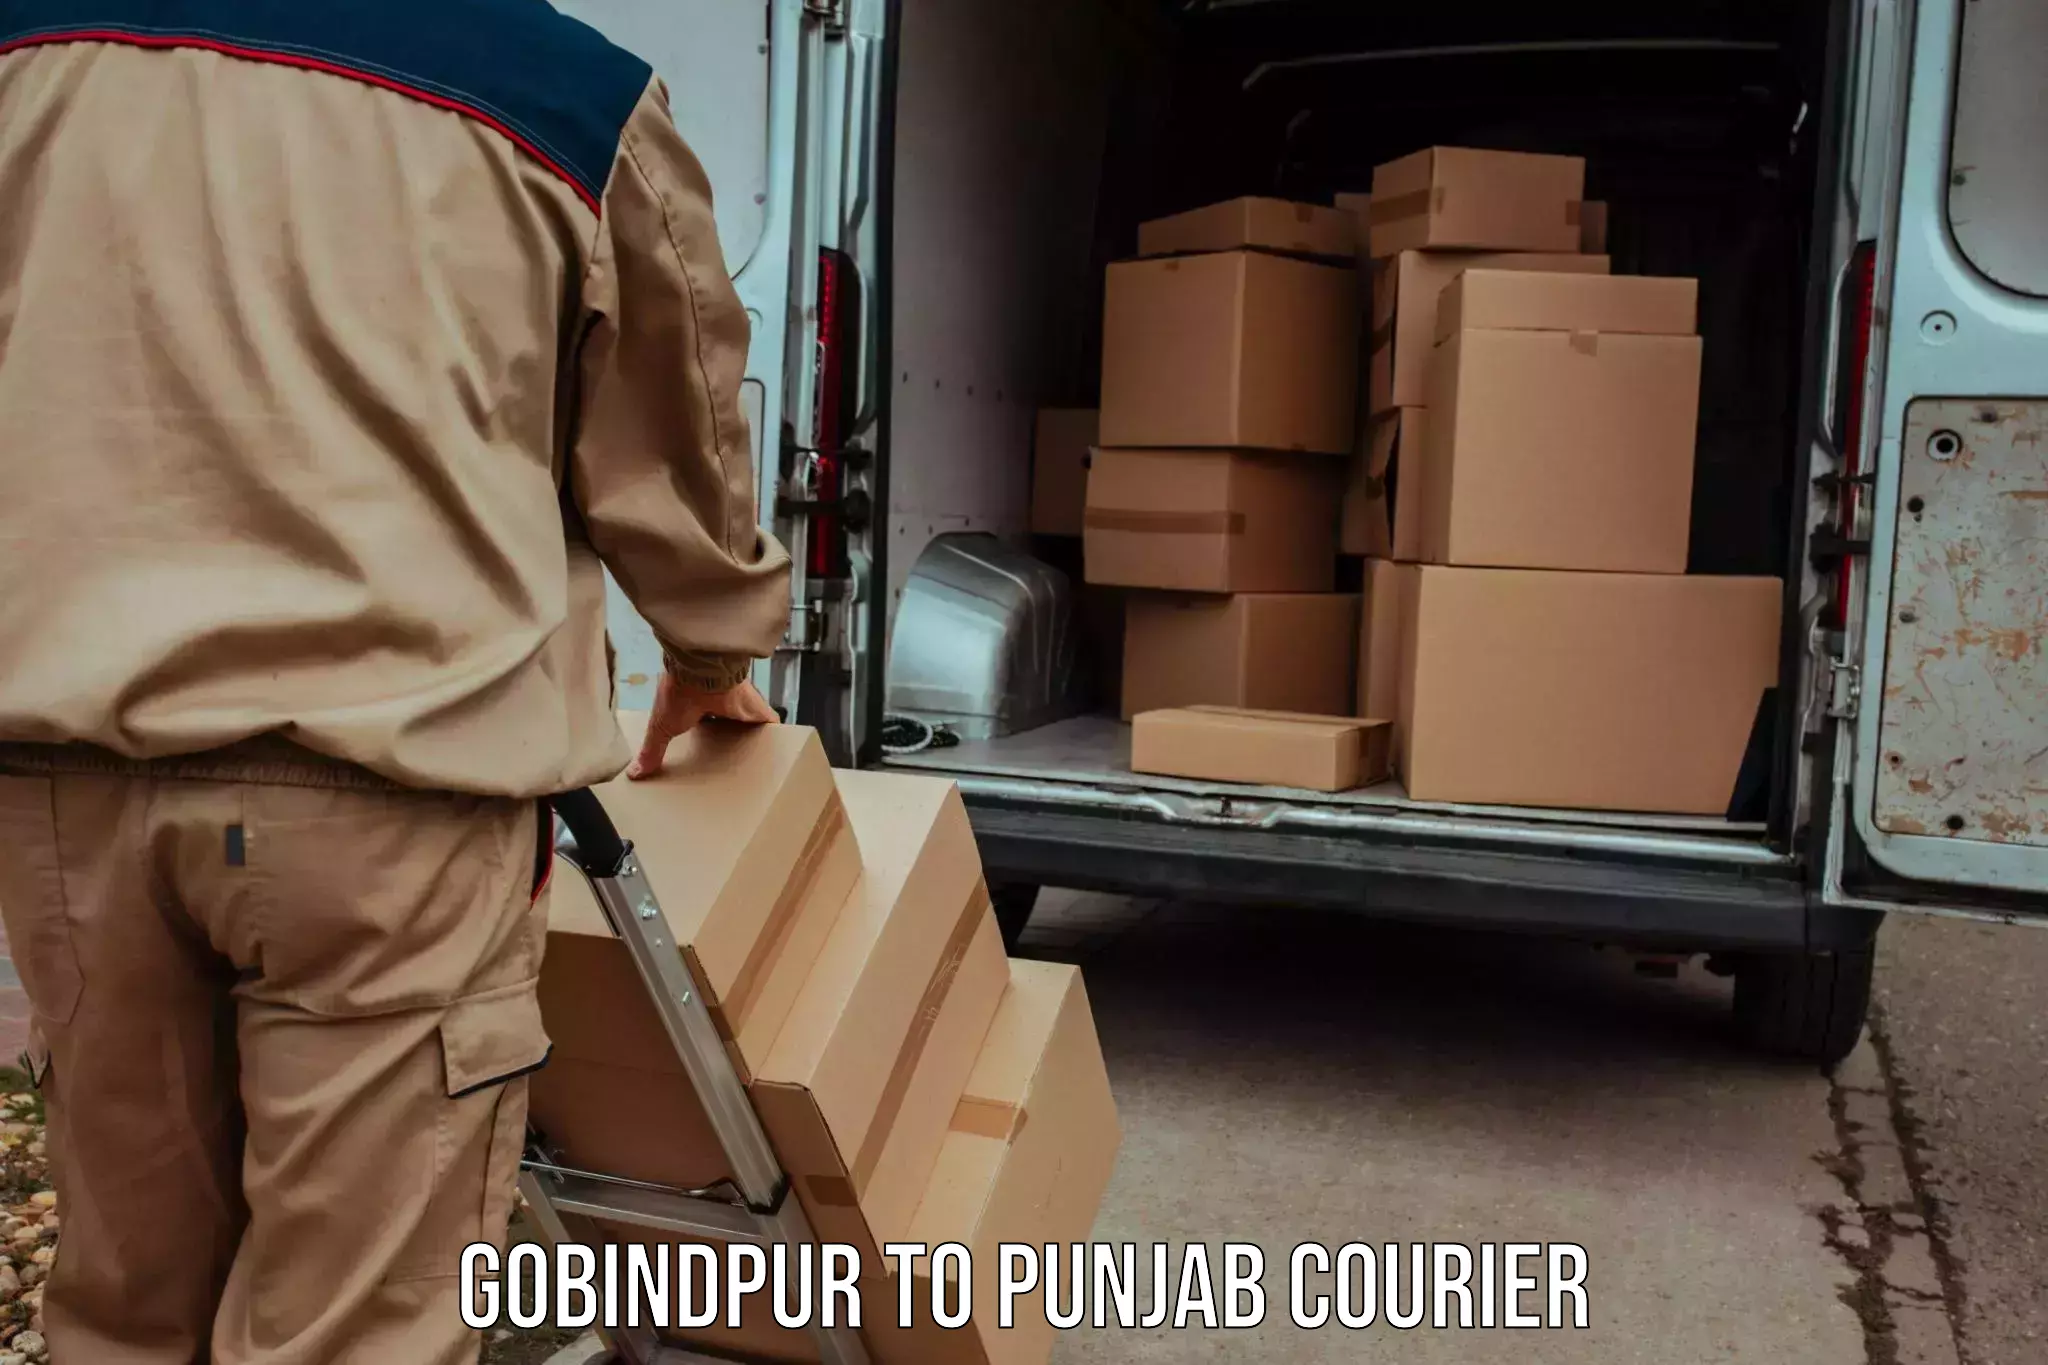 Cash on delivery service Gobindpur to Nabha